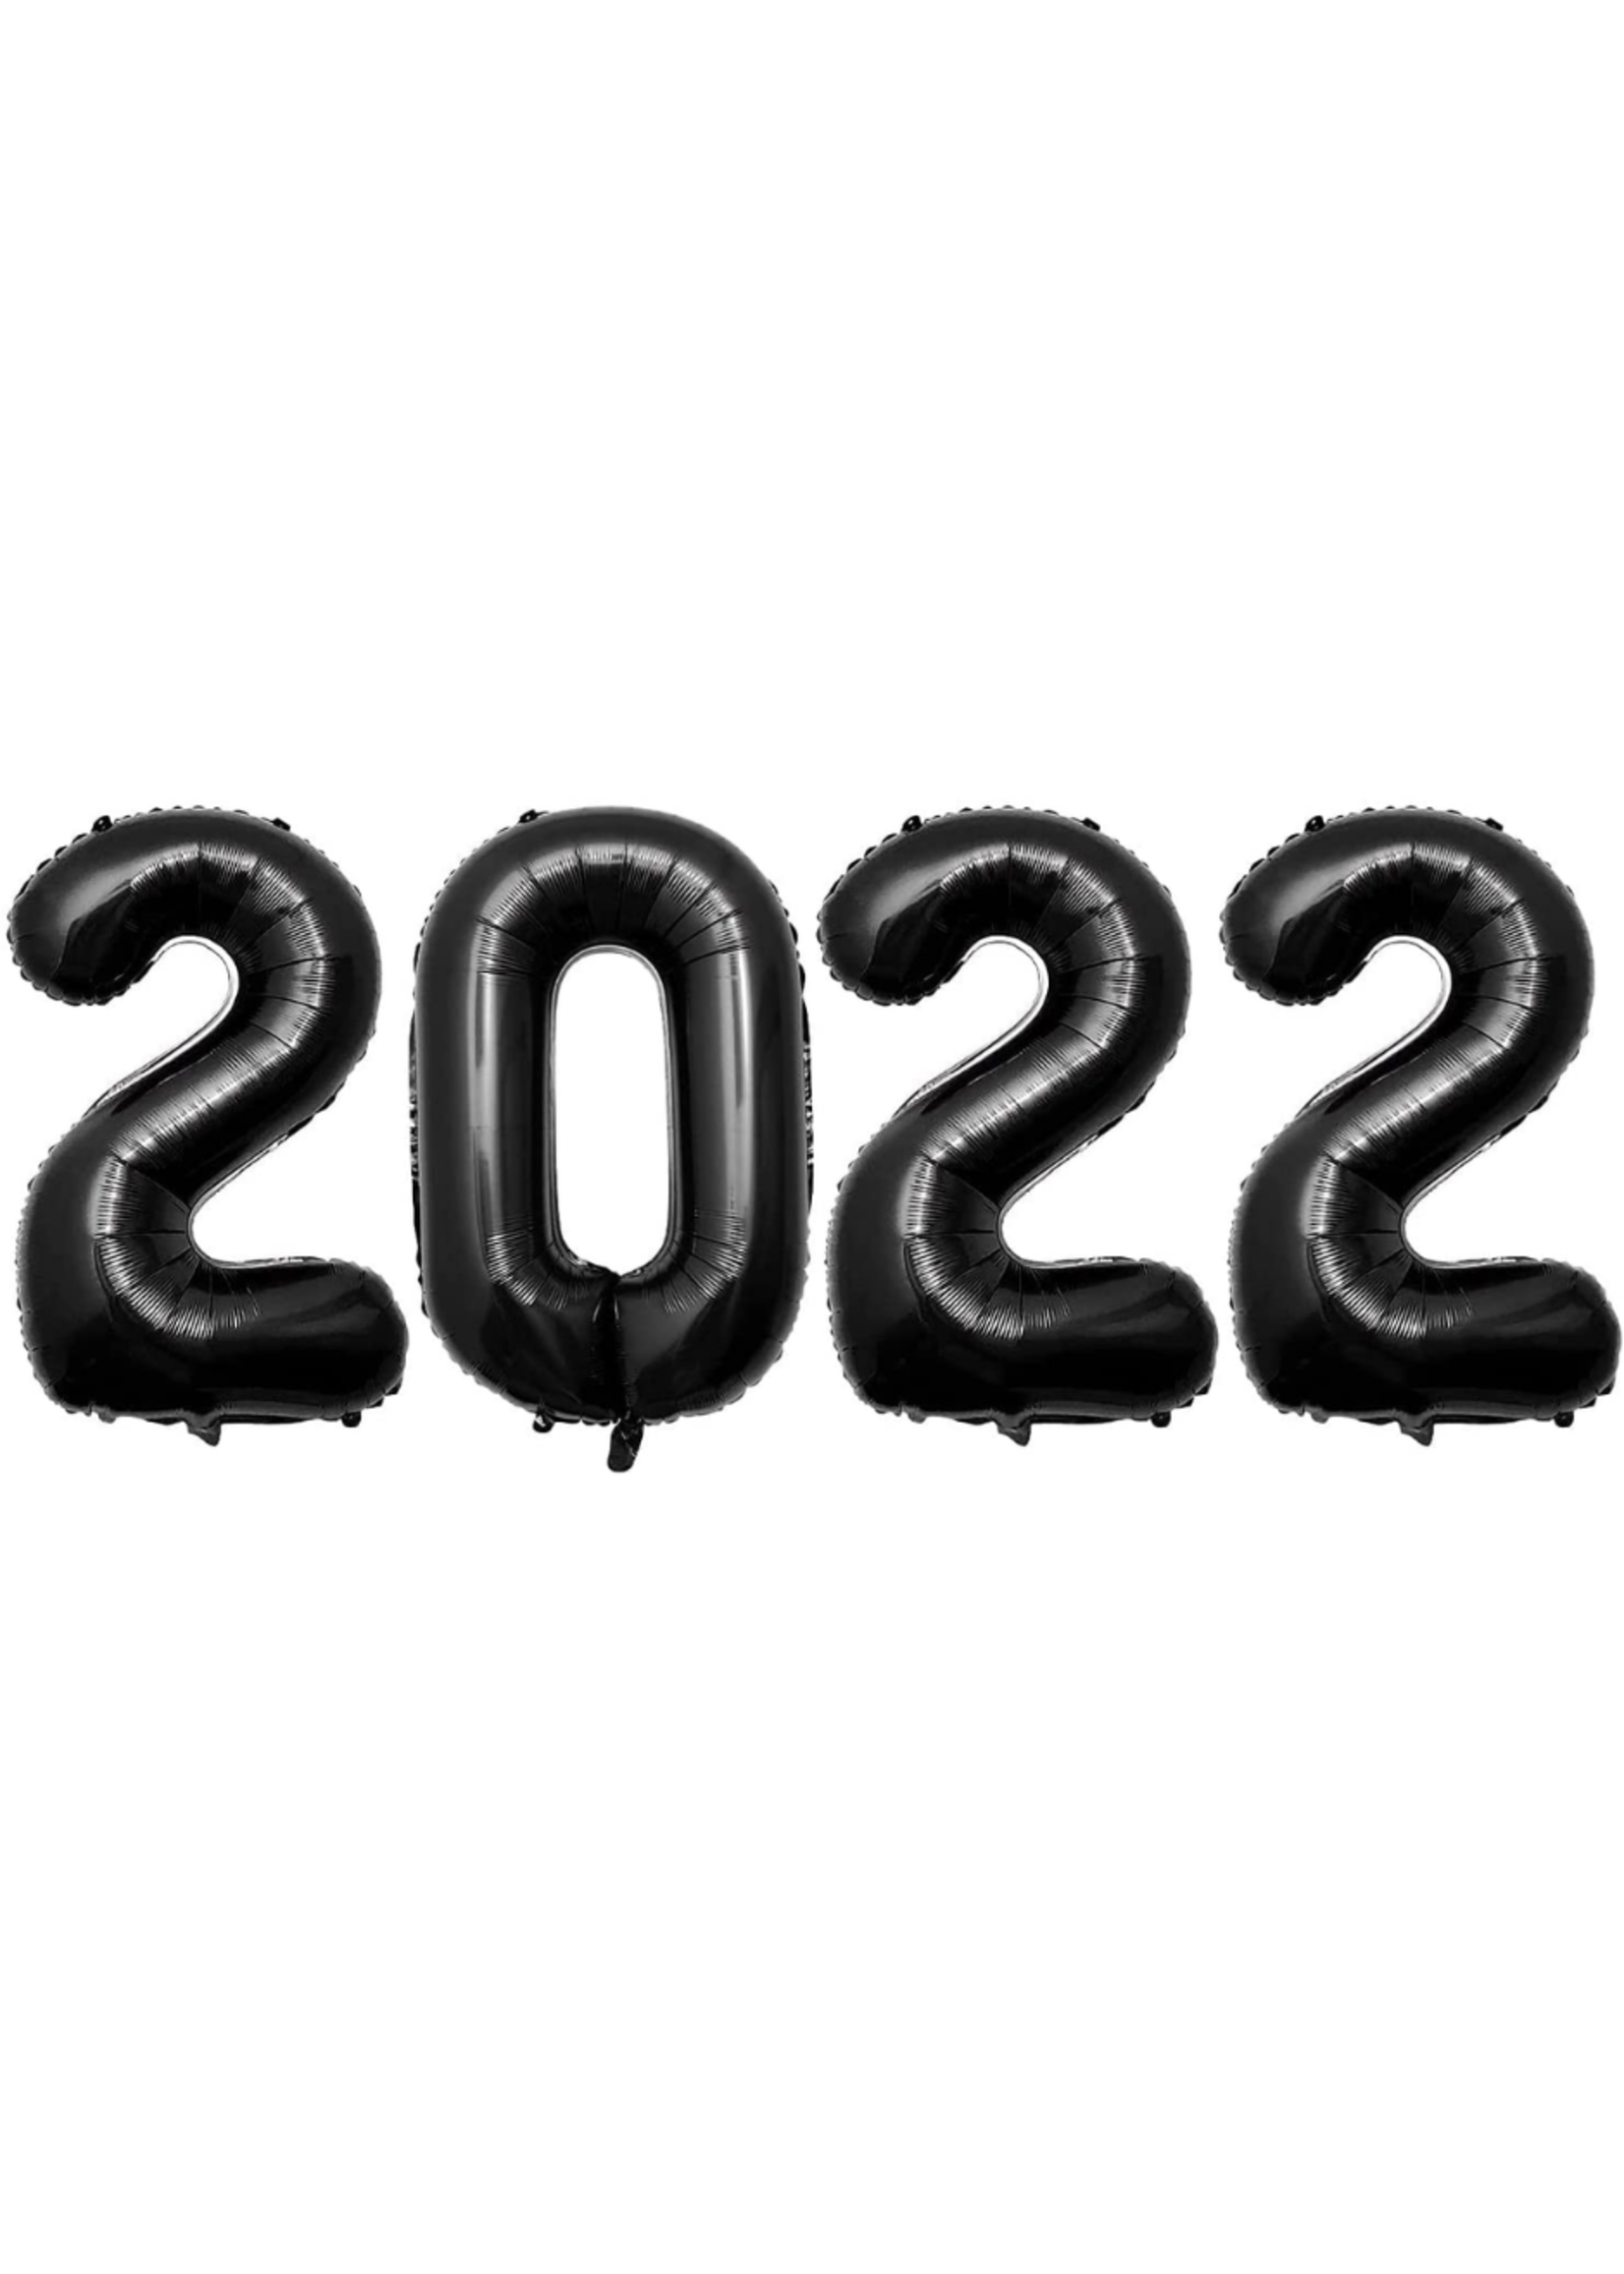 40" 2022 Black Balloons